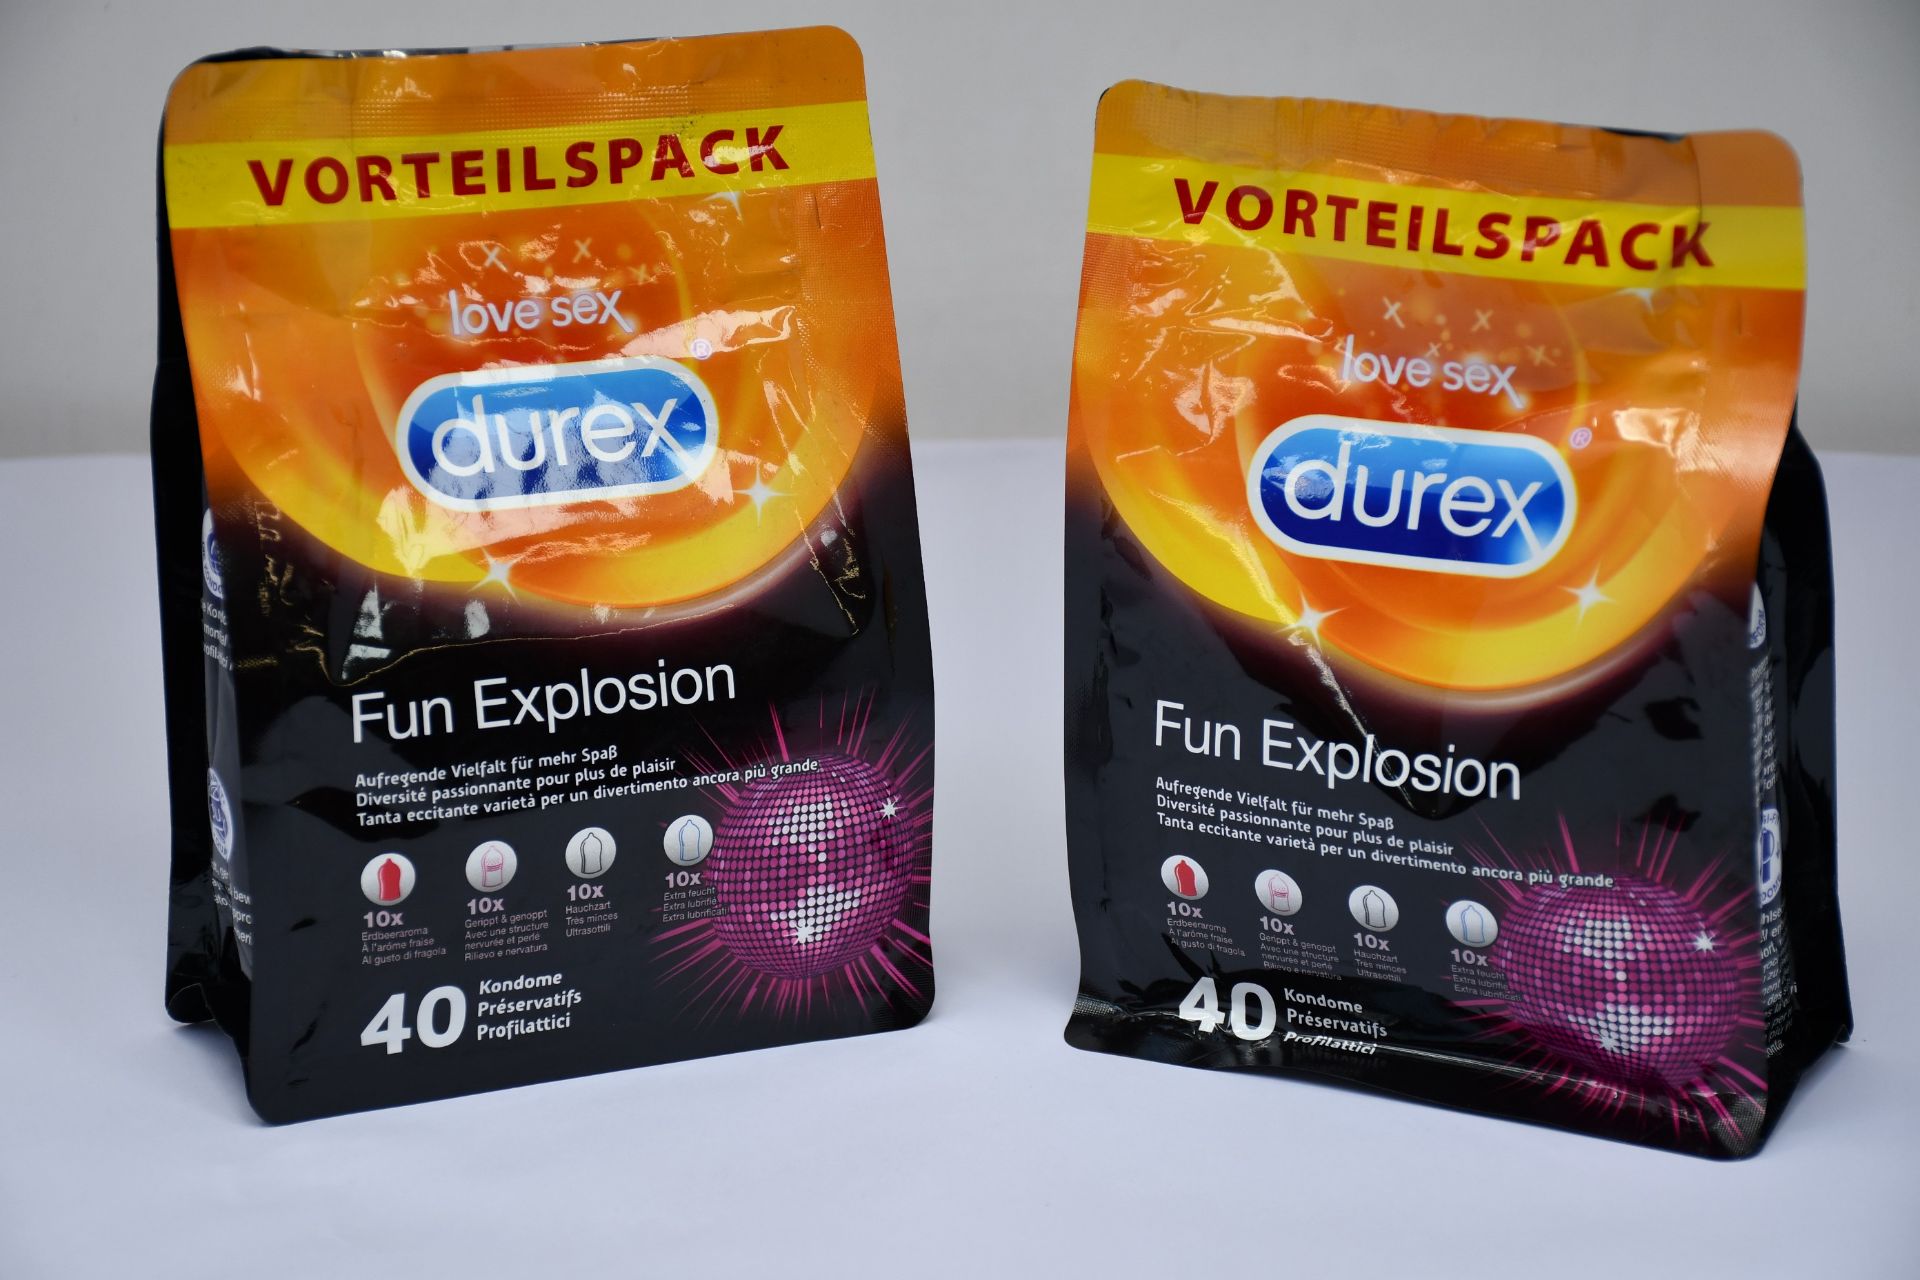 Ten packs of Durex Fun Explosion condoms (40 in a pack).